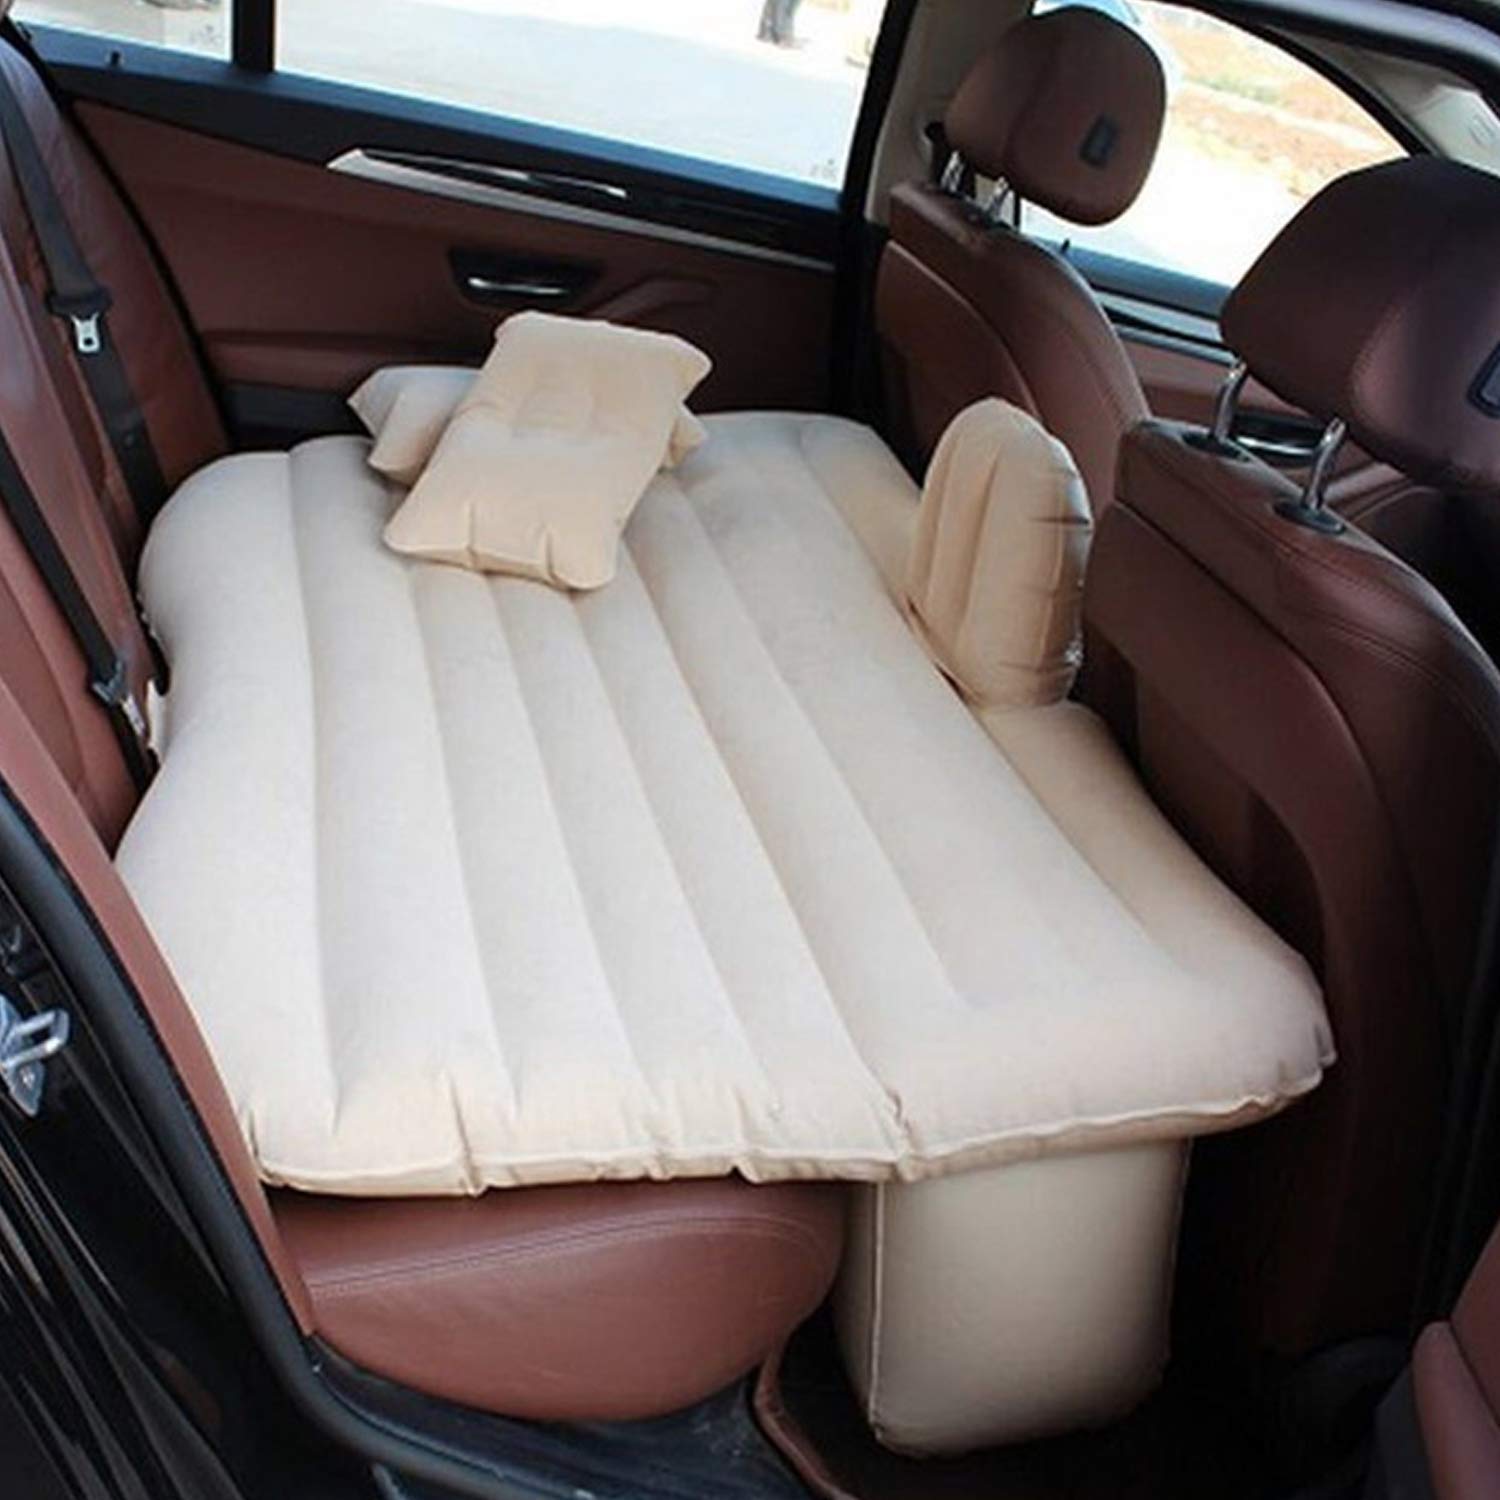 CARMATE Multifunctional Inflatable Car Bed Mattress with Two Air Pillows, Car Air Pump and Repair Kit